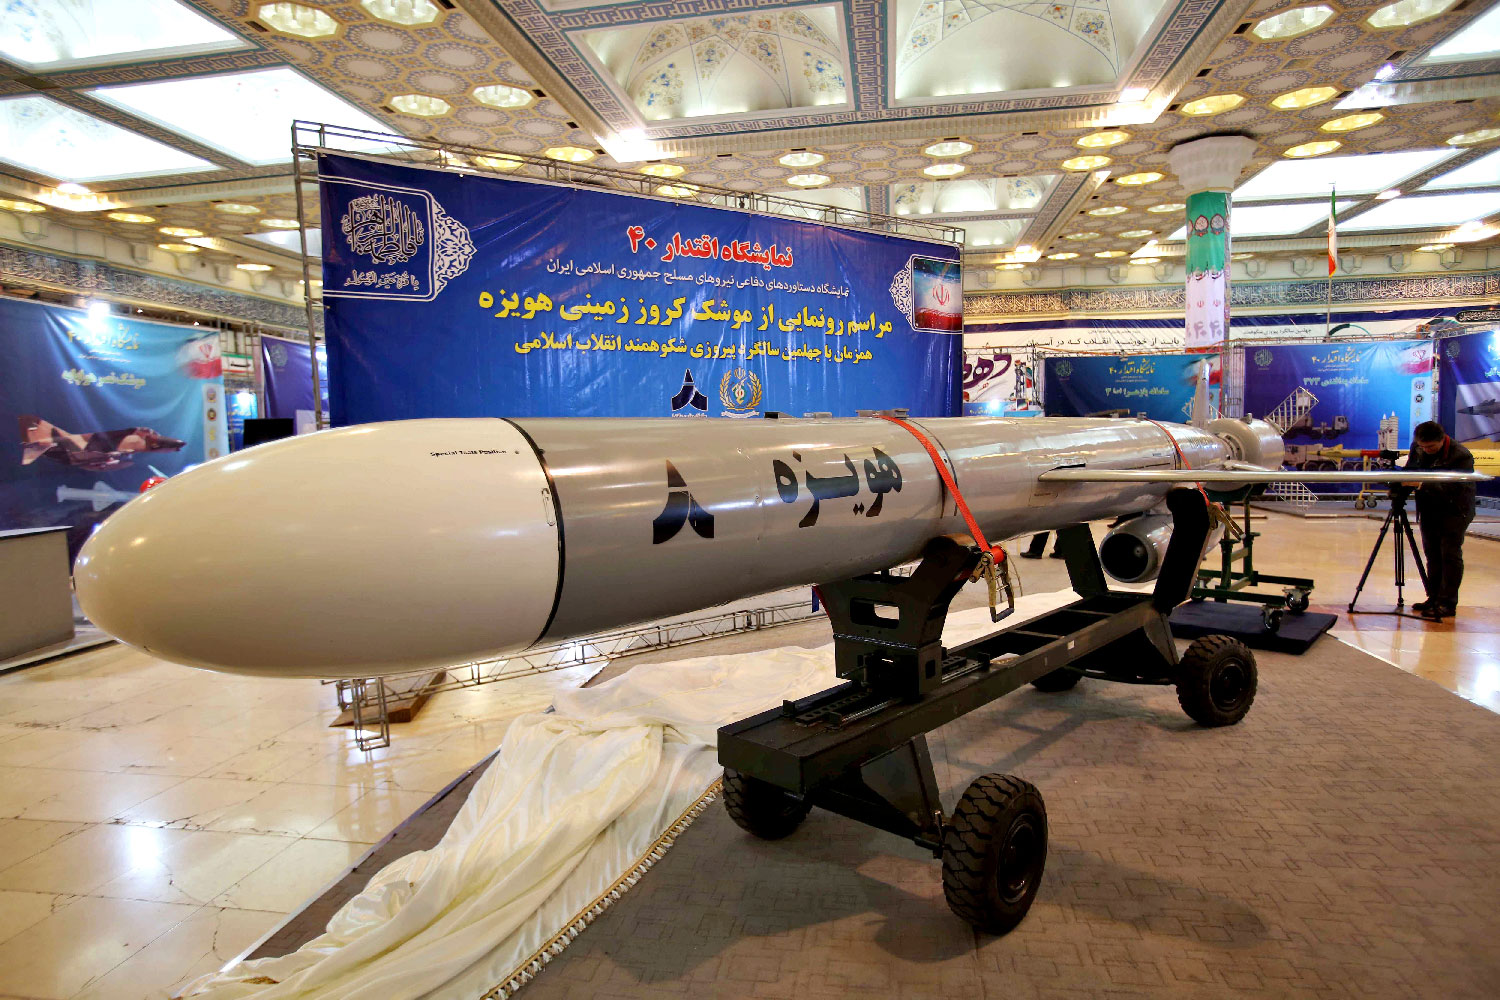 Hoveizeh cruise missile at the Imam Khomeini grand mosque in Tehran, Iran on Saturday, Feb. 2, 2019.